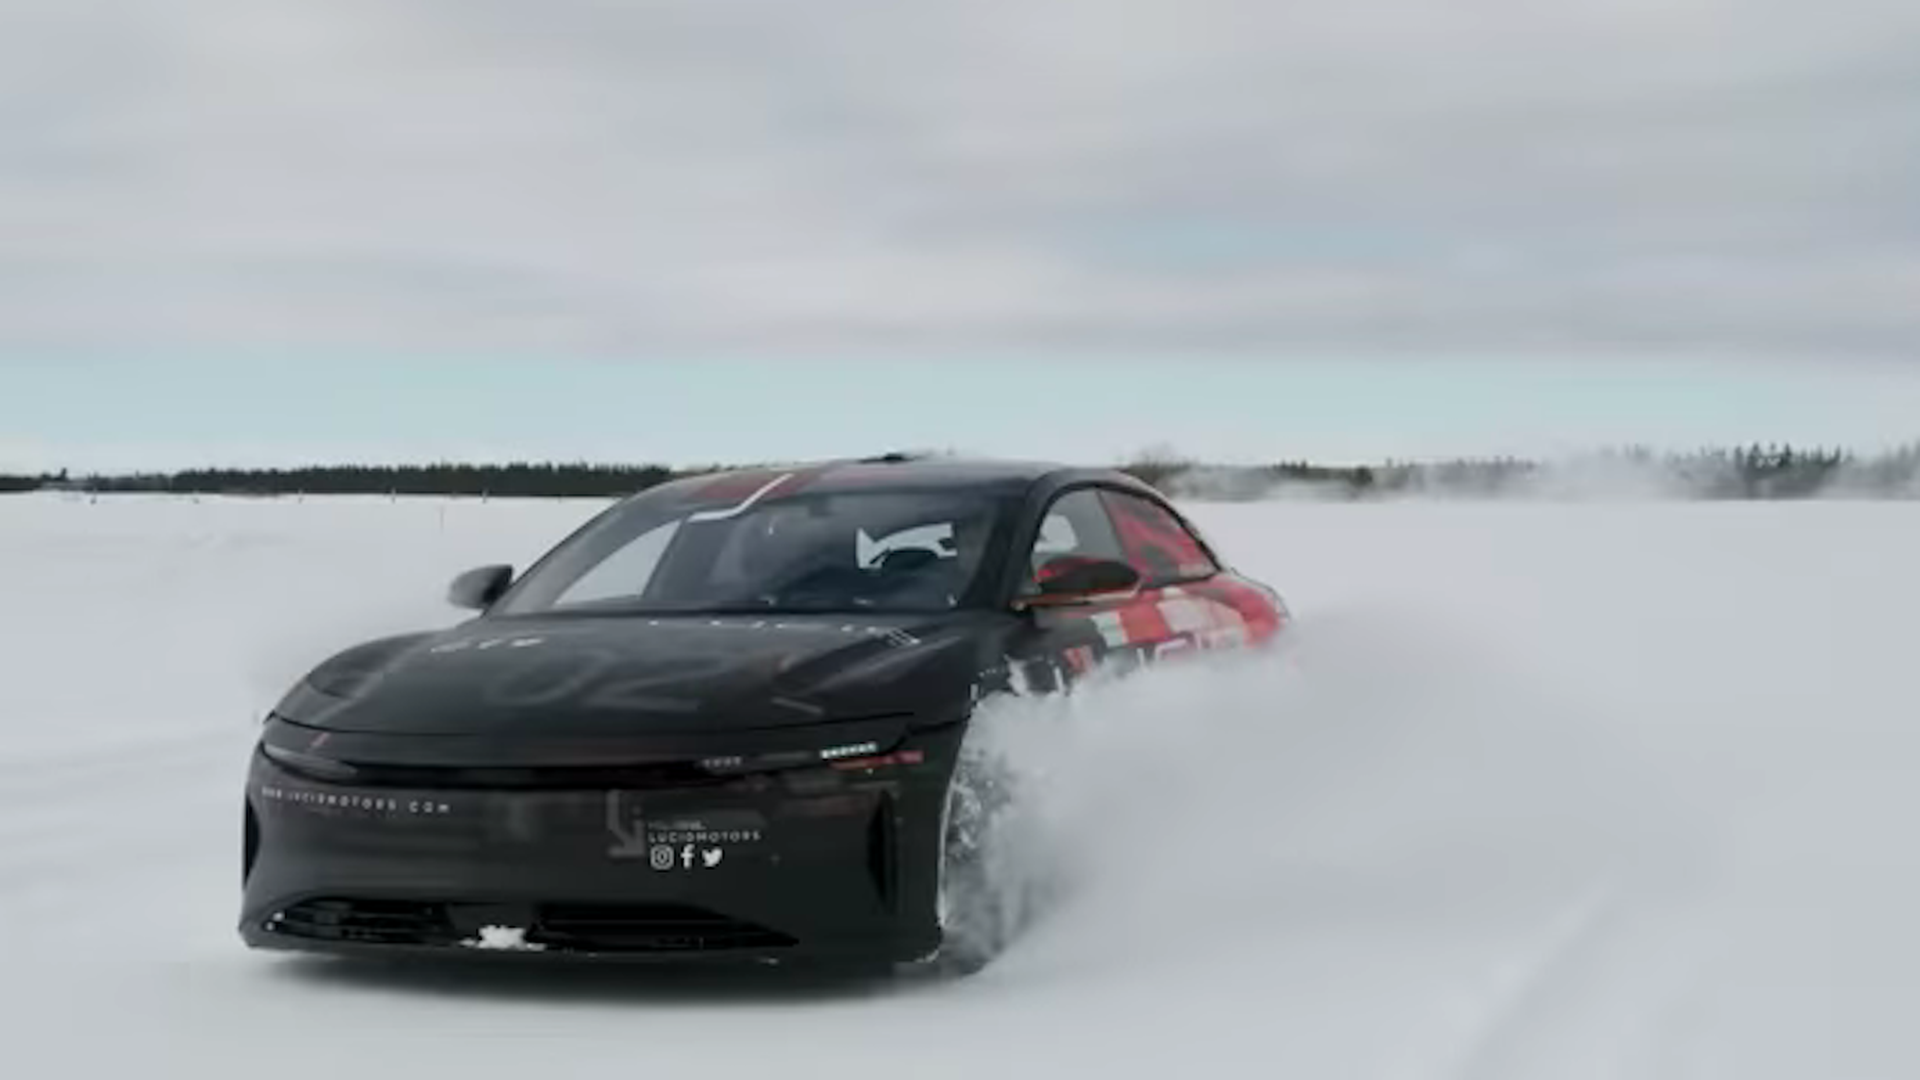 Screenshot of Lucid Motors video showing prototype testing in winter conditions